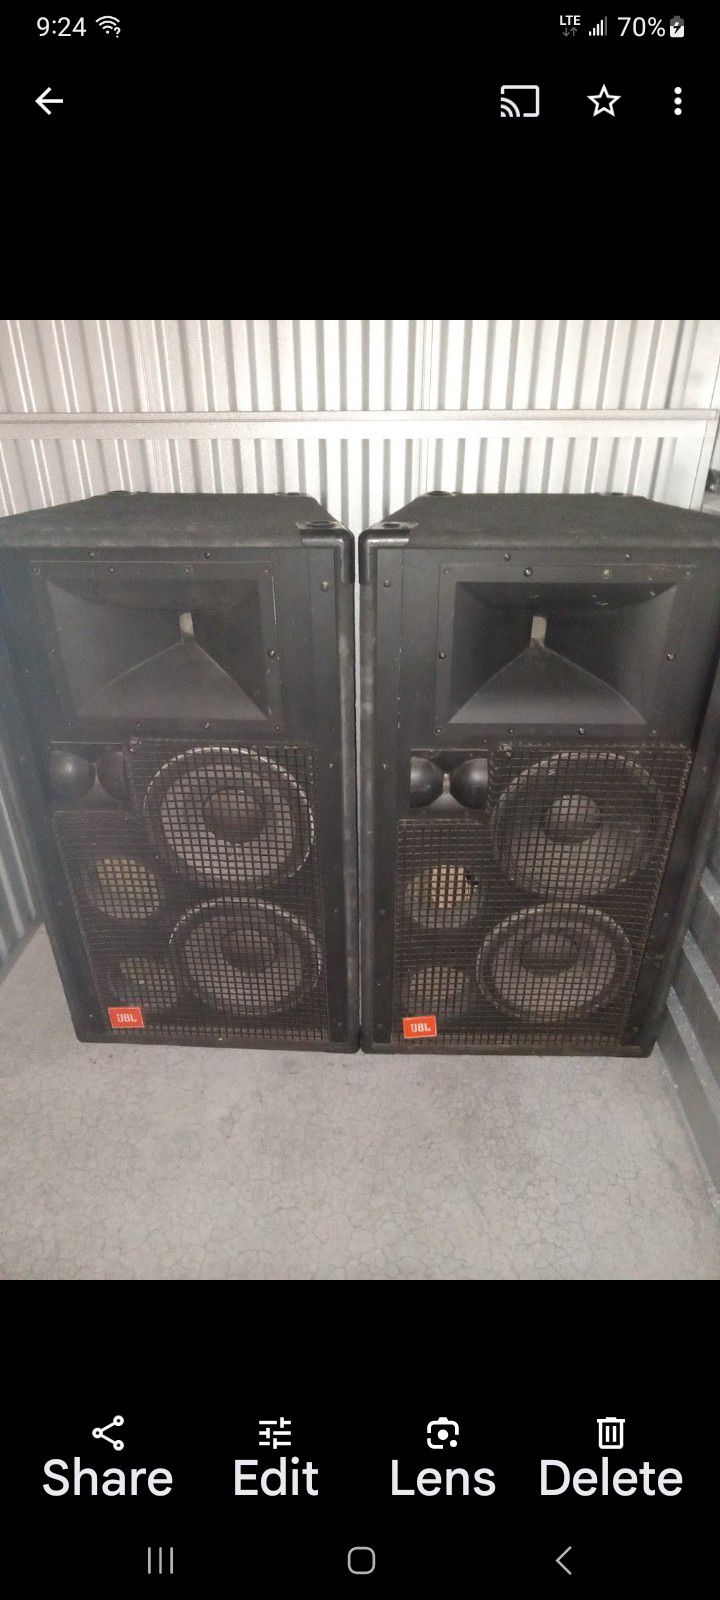 JBL  4732a Pro Audio Speakers